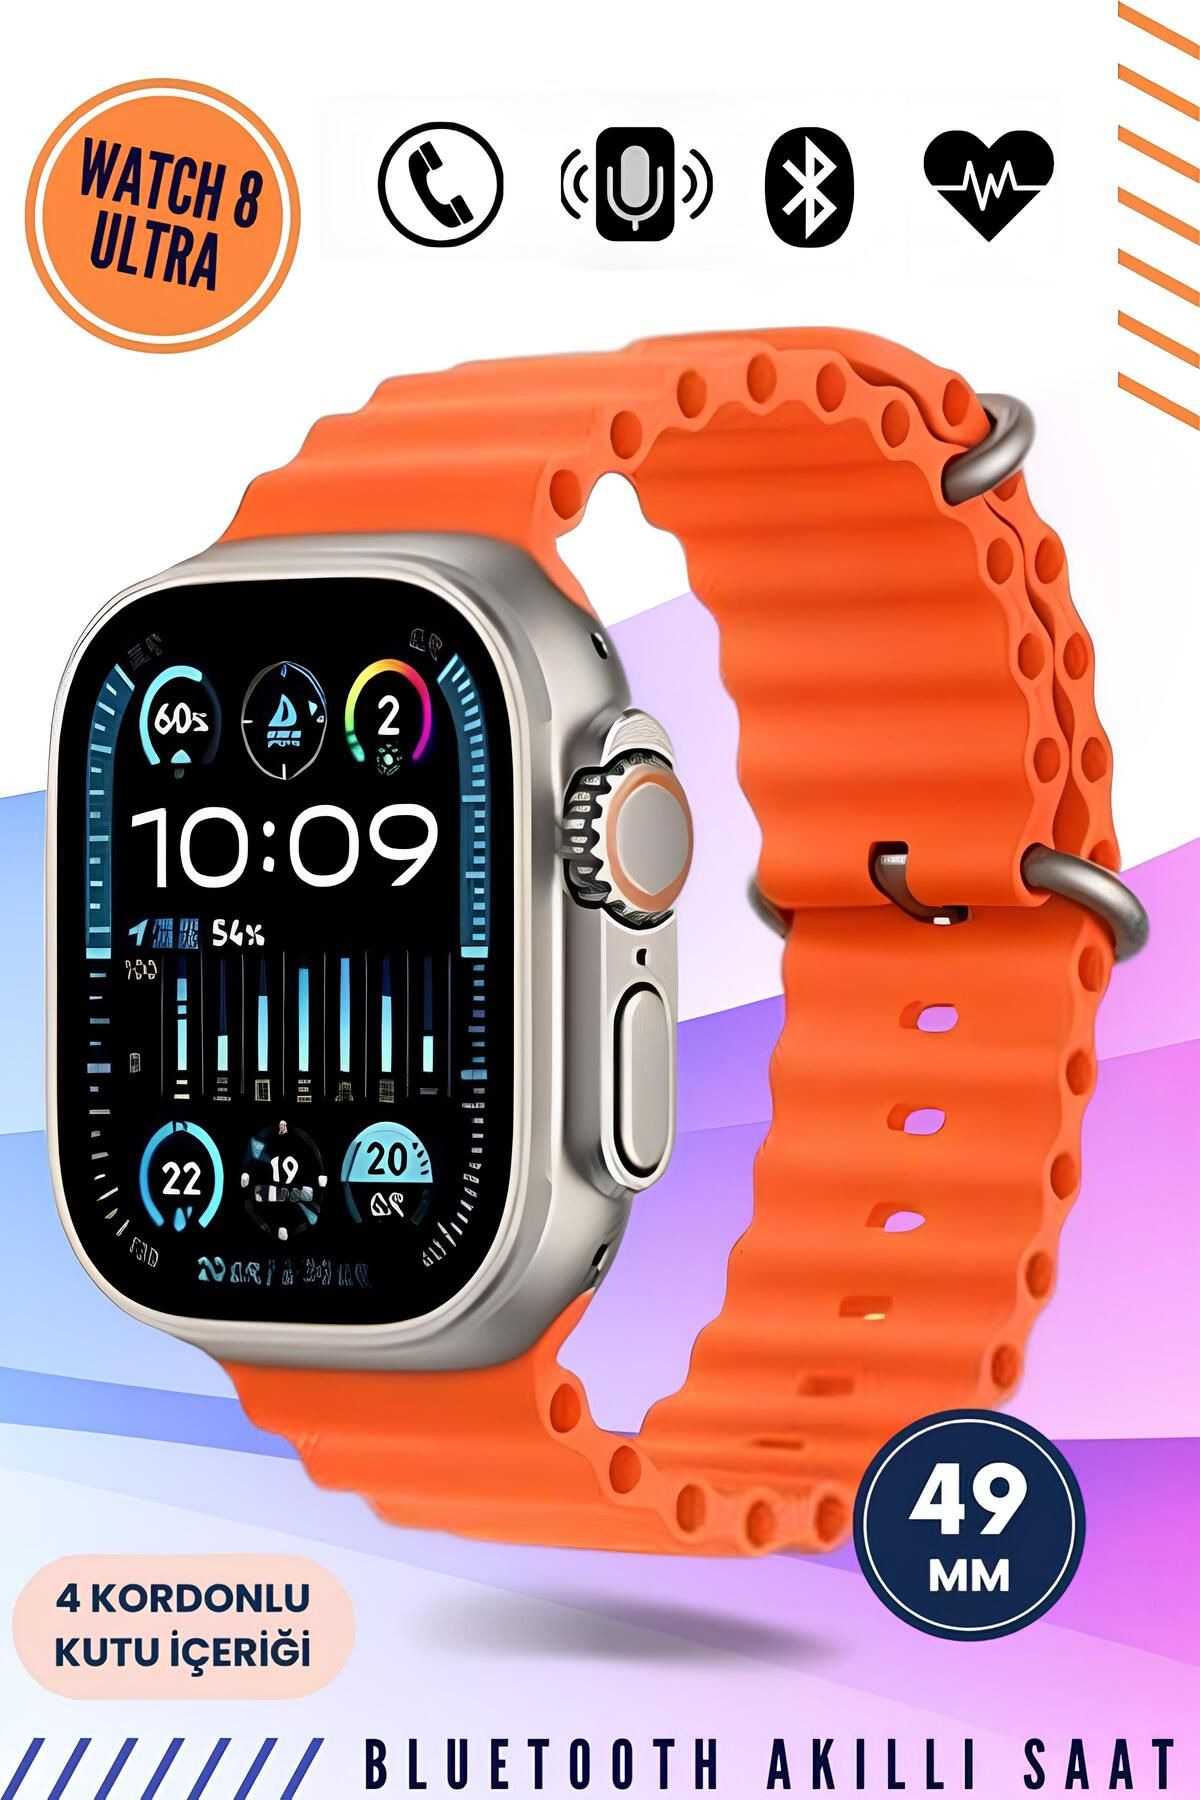 Favors Watch 8 Ultra 4 Kordonlu Akıllı Saat İos Android Uyumlu Türkçe Smartwatch T20 Ultra Turuncu Renk